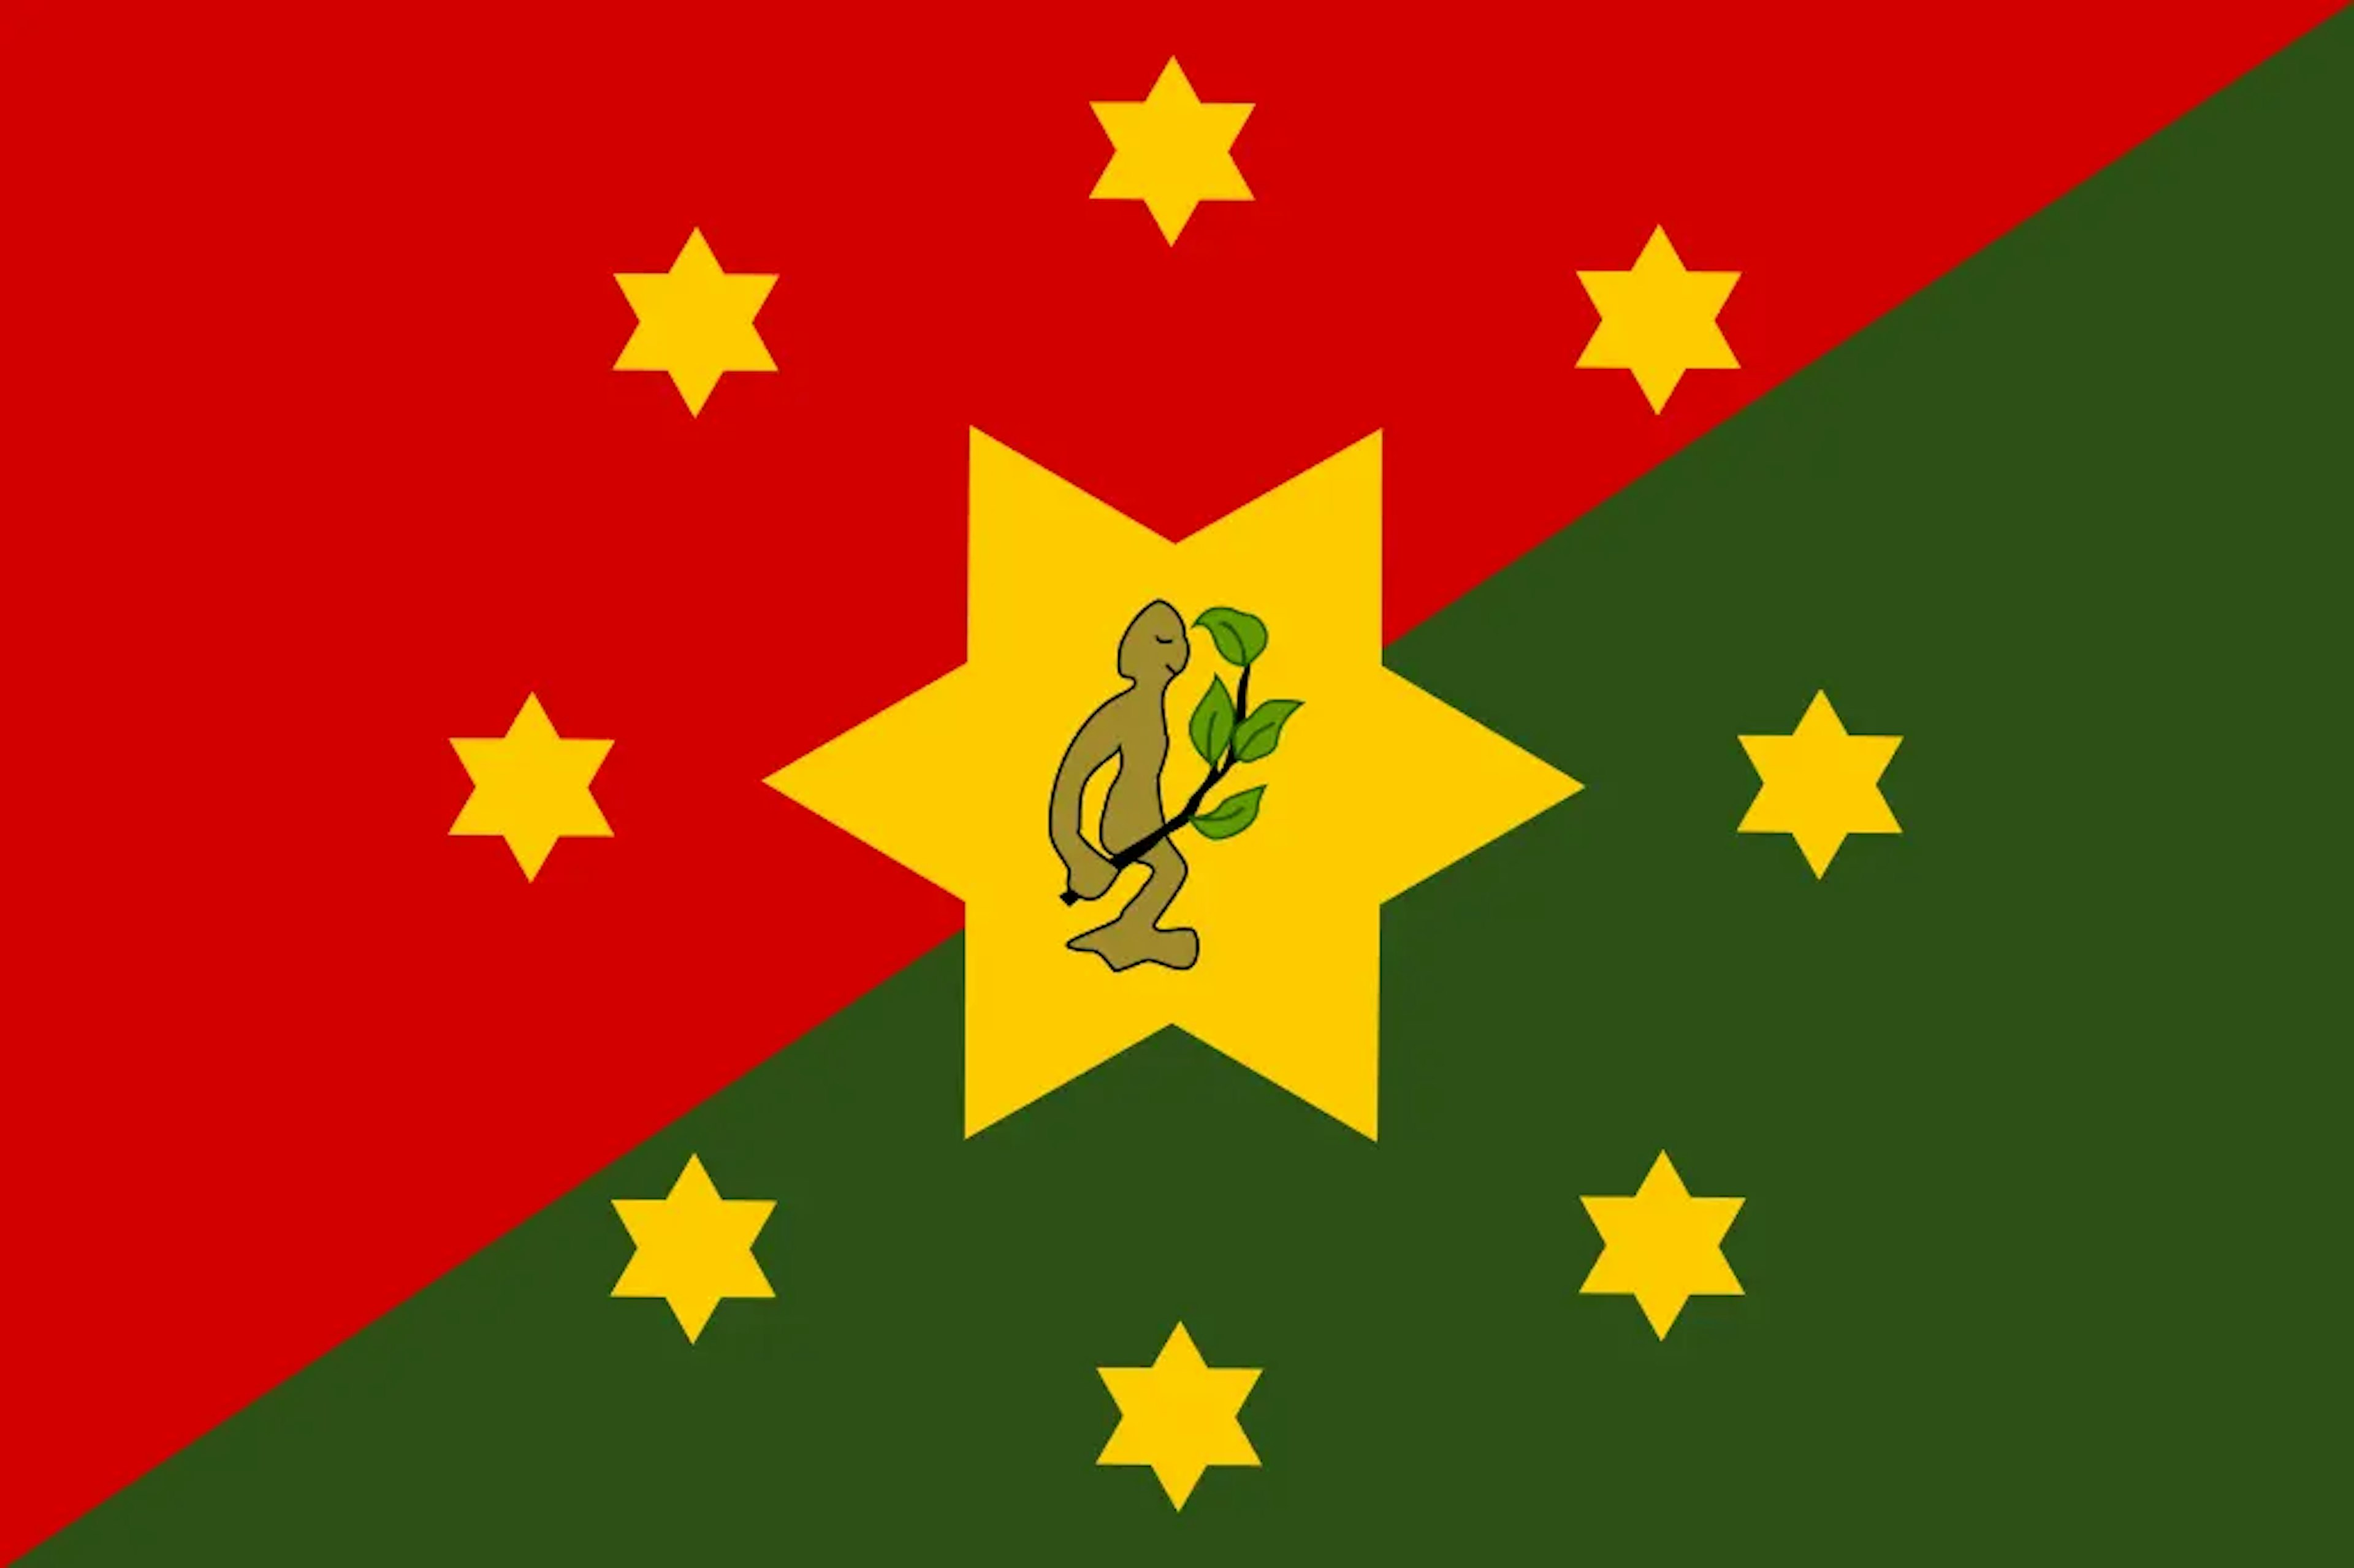 Cover Image for Goroka Flag - Flag of Eastern Highlands